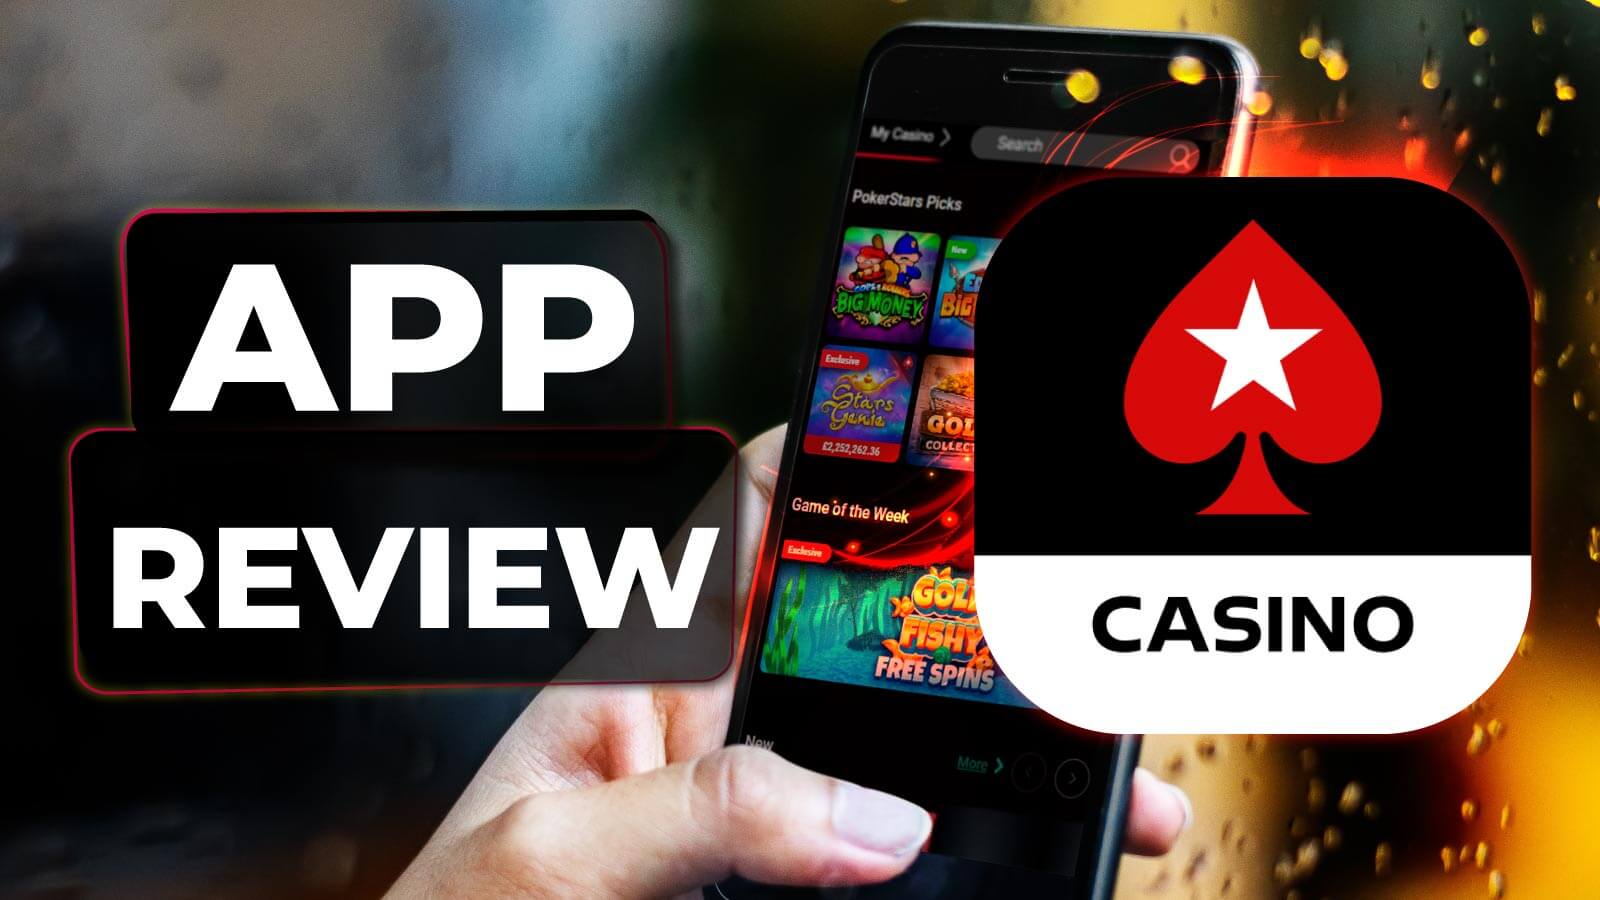 Pokerstars Casino App Review